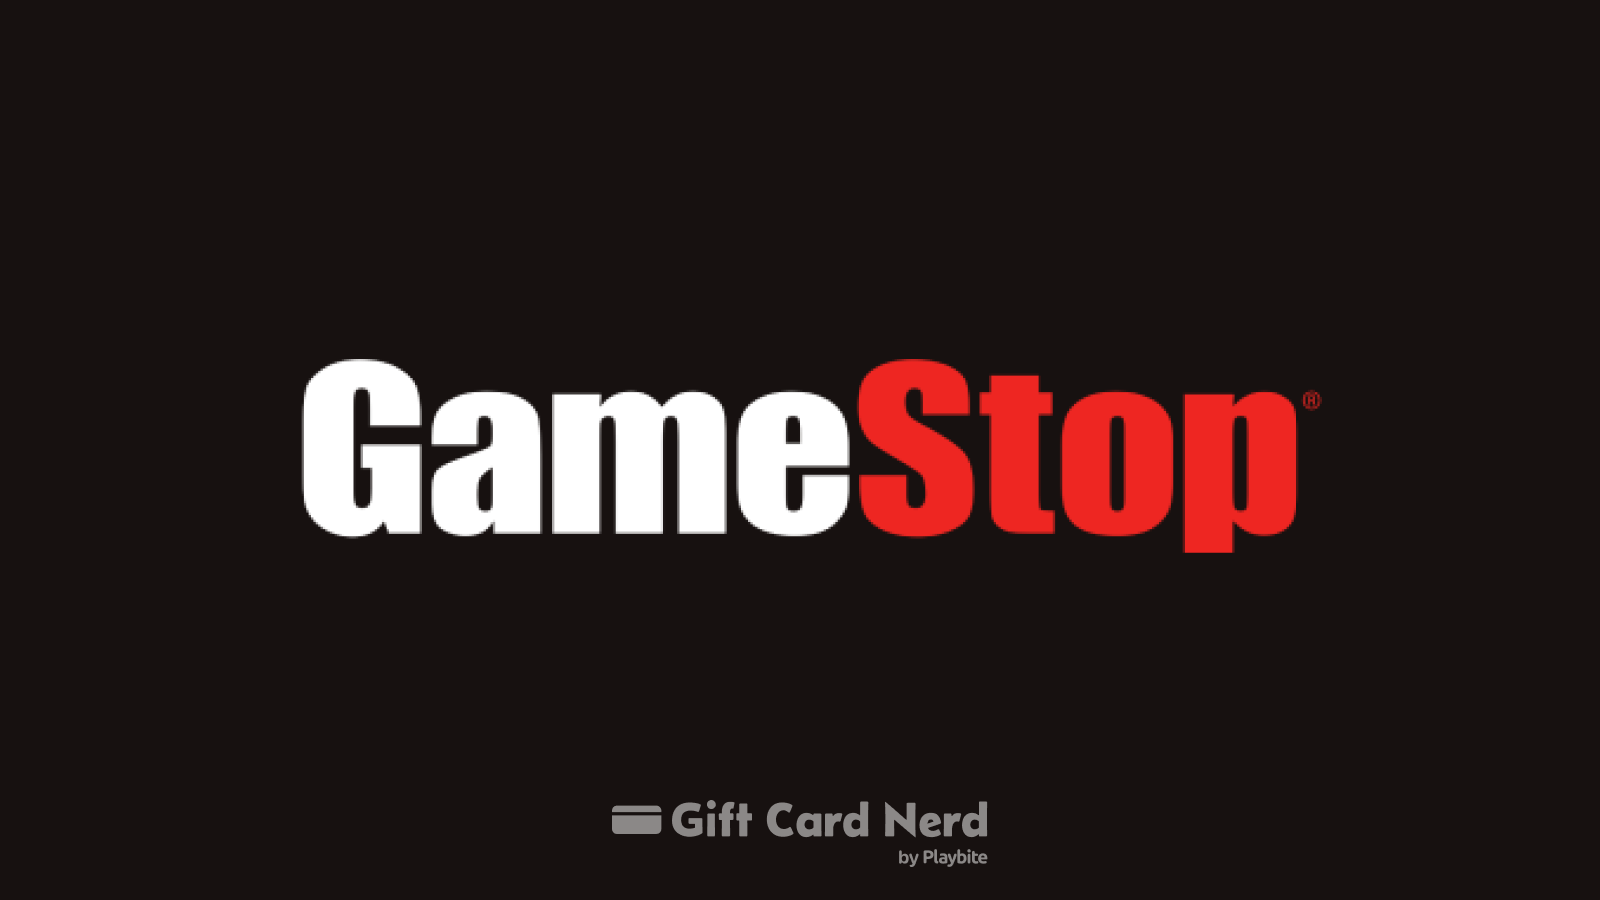 Can You Buy GameStop Gift Cards at CVS?